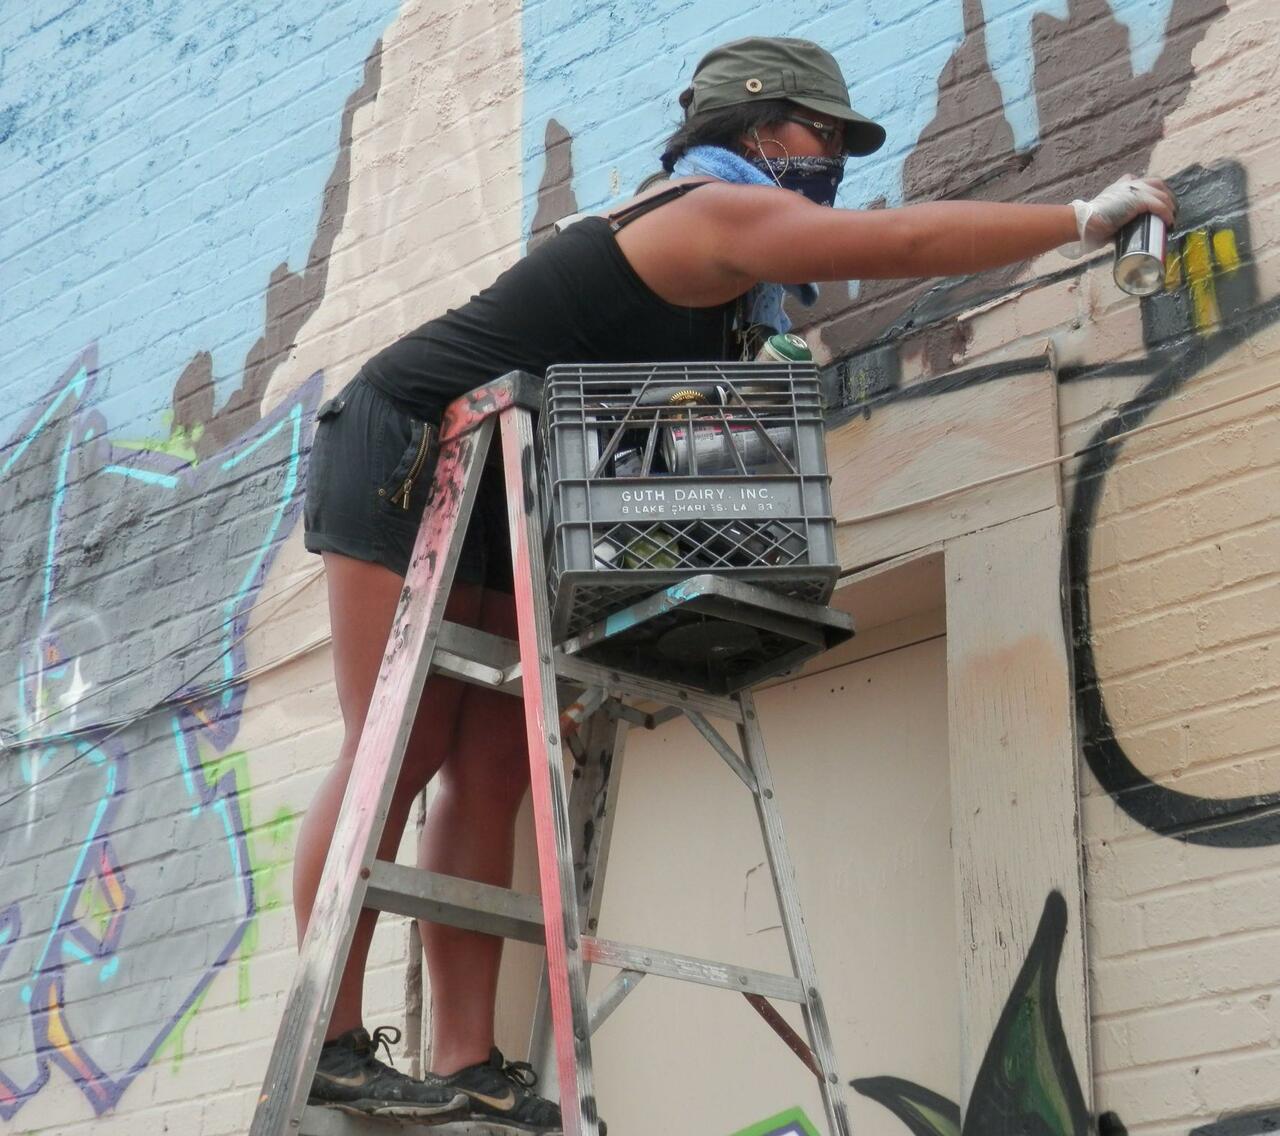 RT @JohnRMoffitt: #Houston #Graffiti #Streetart Queen brought her large crew to Meeting of Styles 2015, for a larger cultural piece. http://t.co/46ociAWvxK